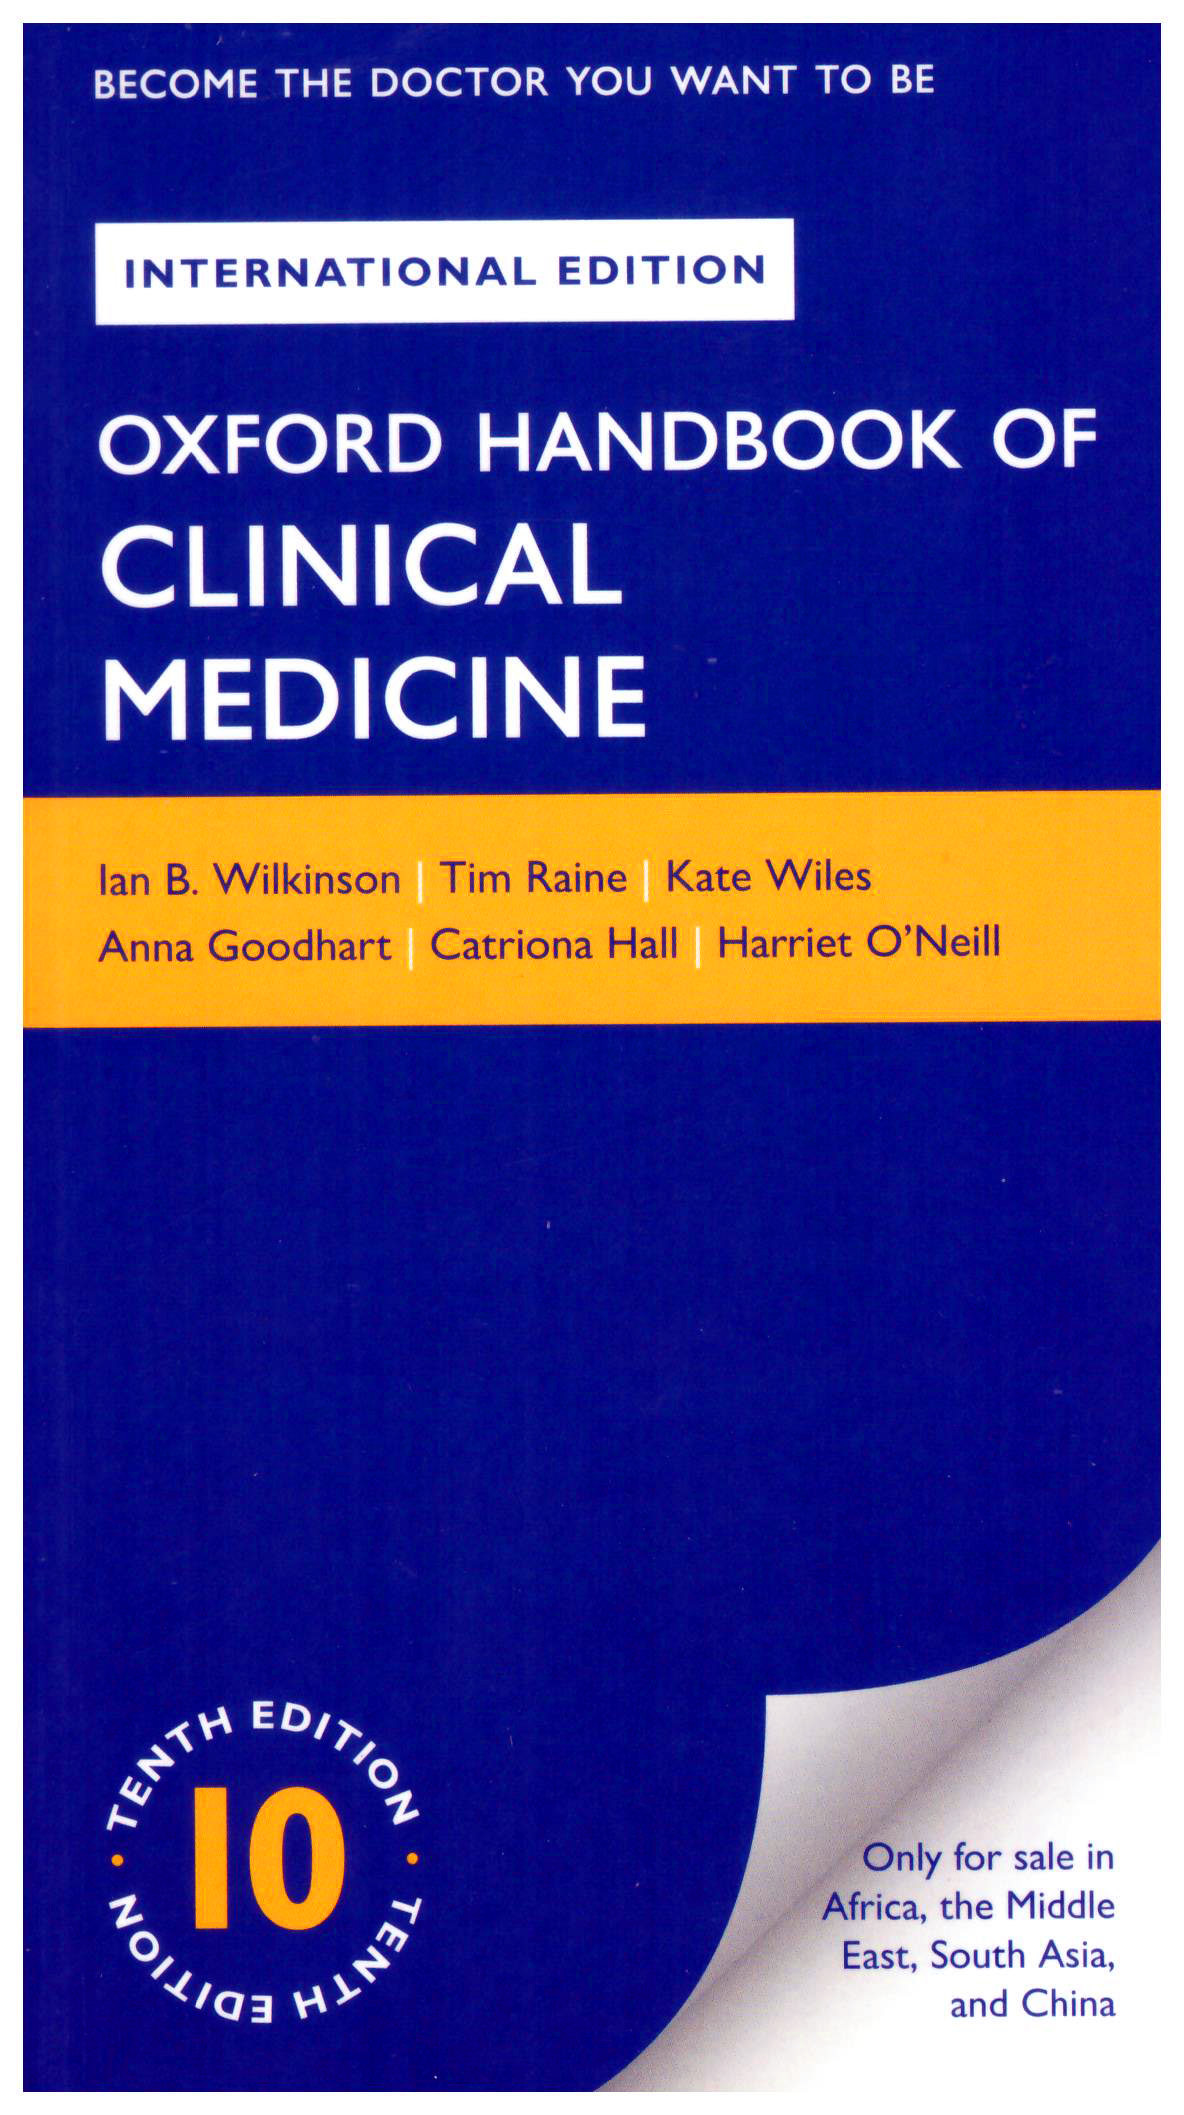 Oxford Handbook Of Clinical Medicine